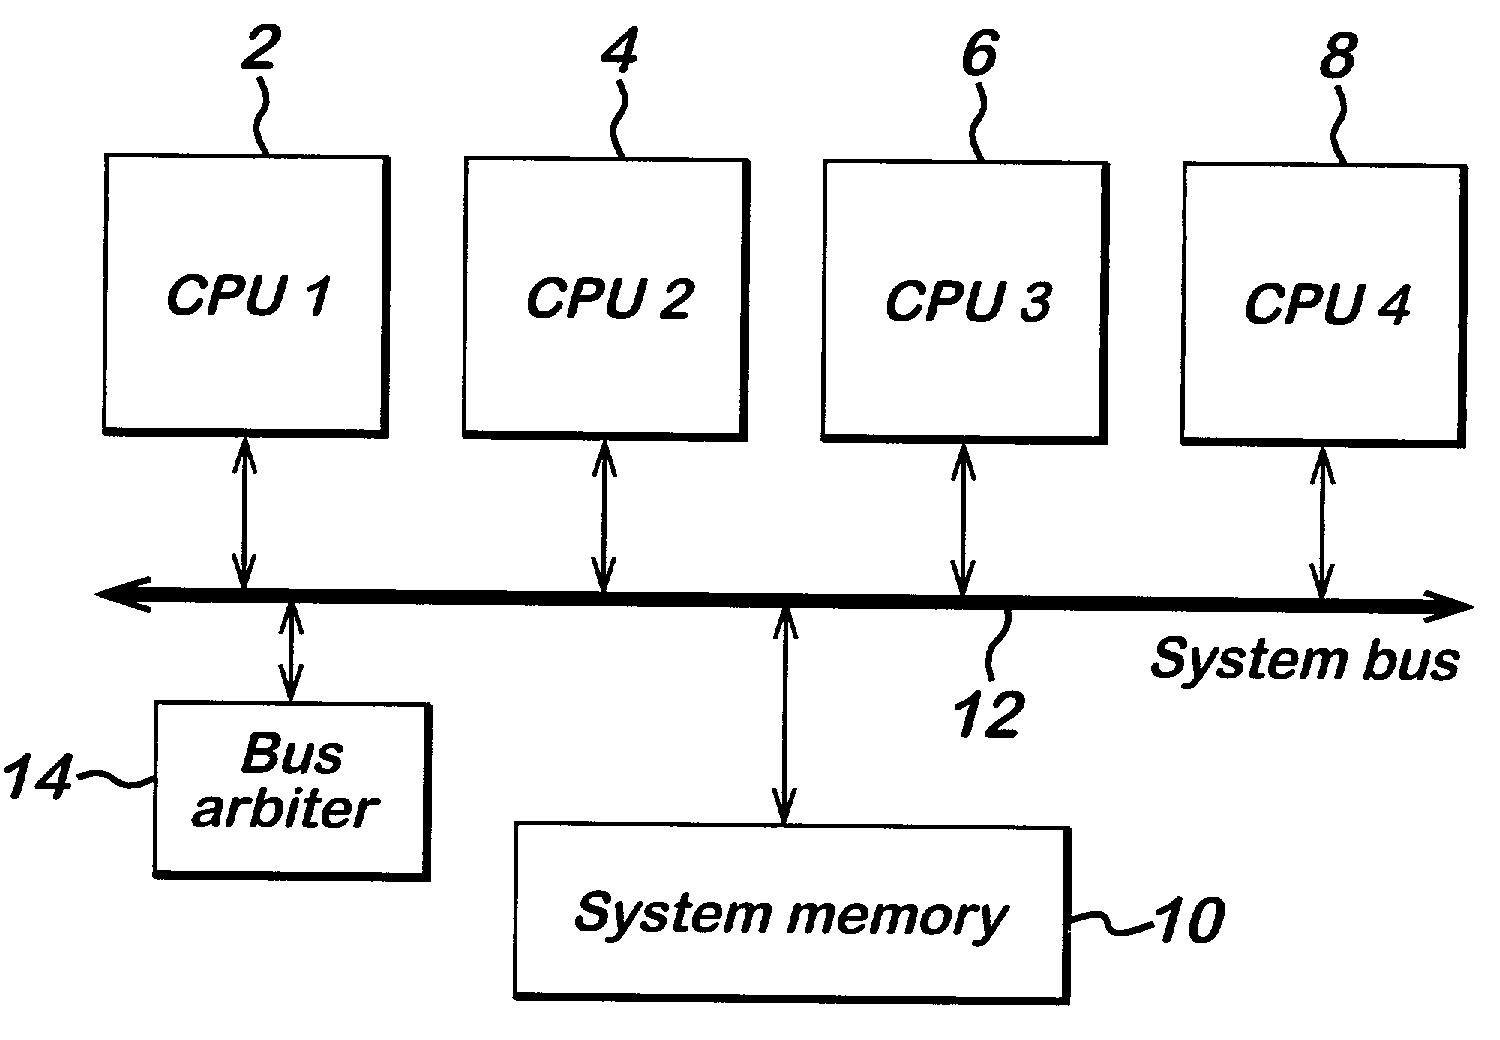 Processing system